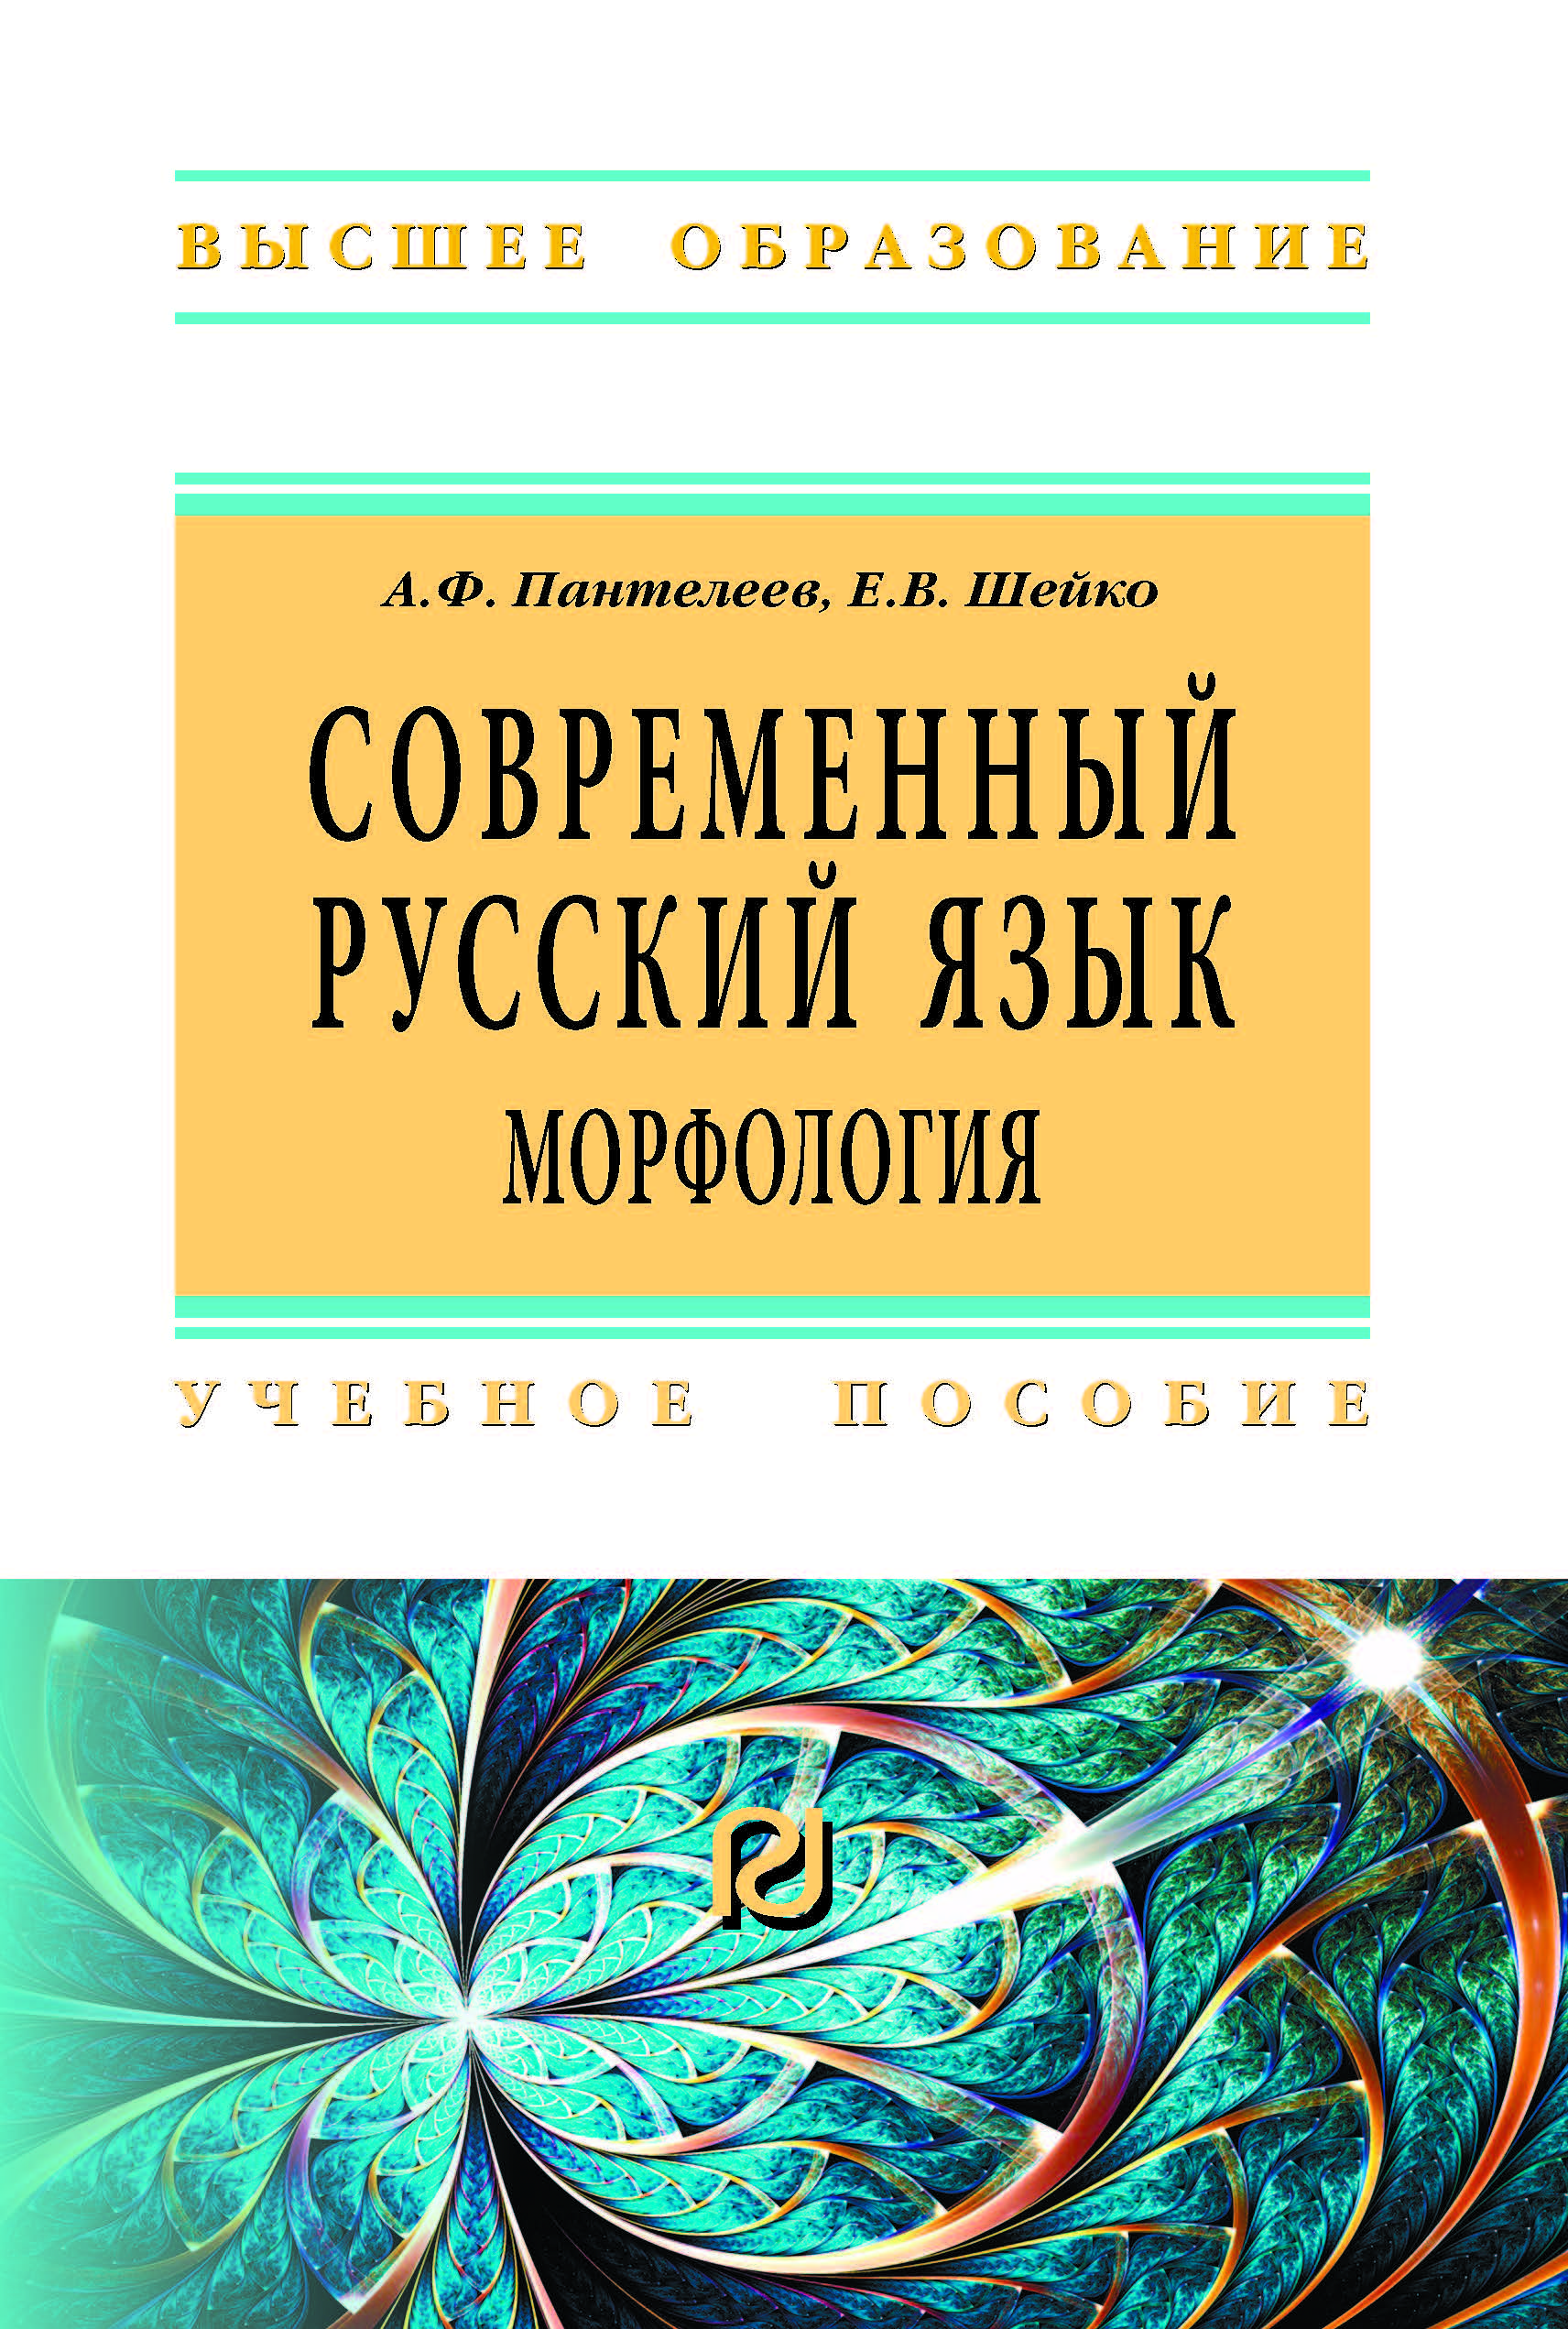                         Modern Russian language: Morphology
            